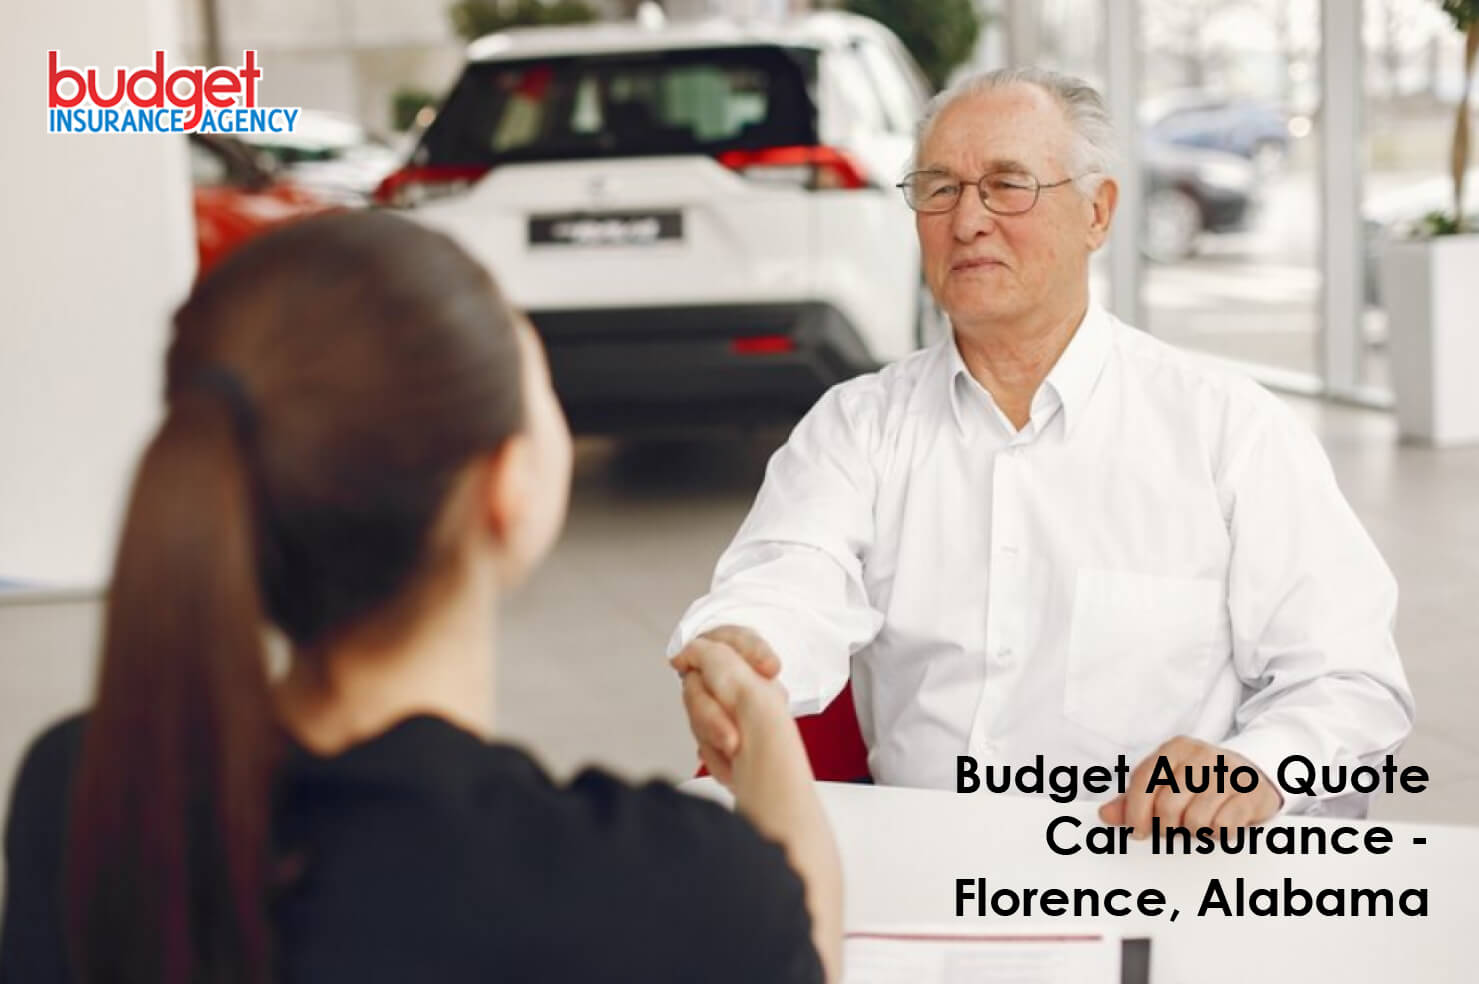 Budget Auto Quote Car Insurance - Florence, Alabama